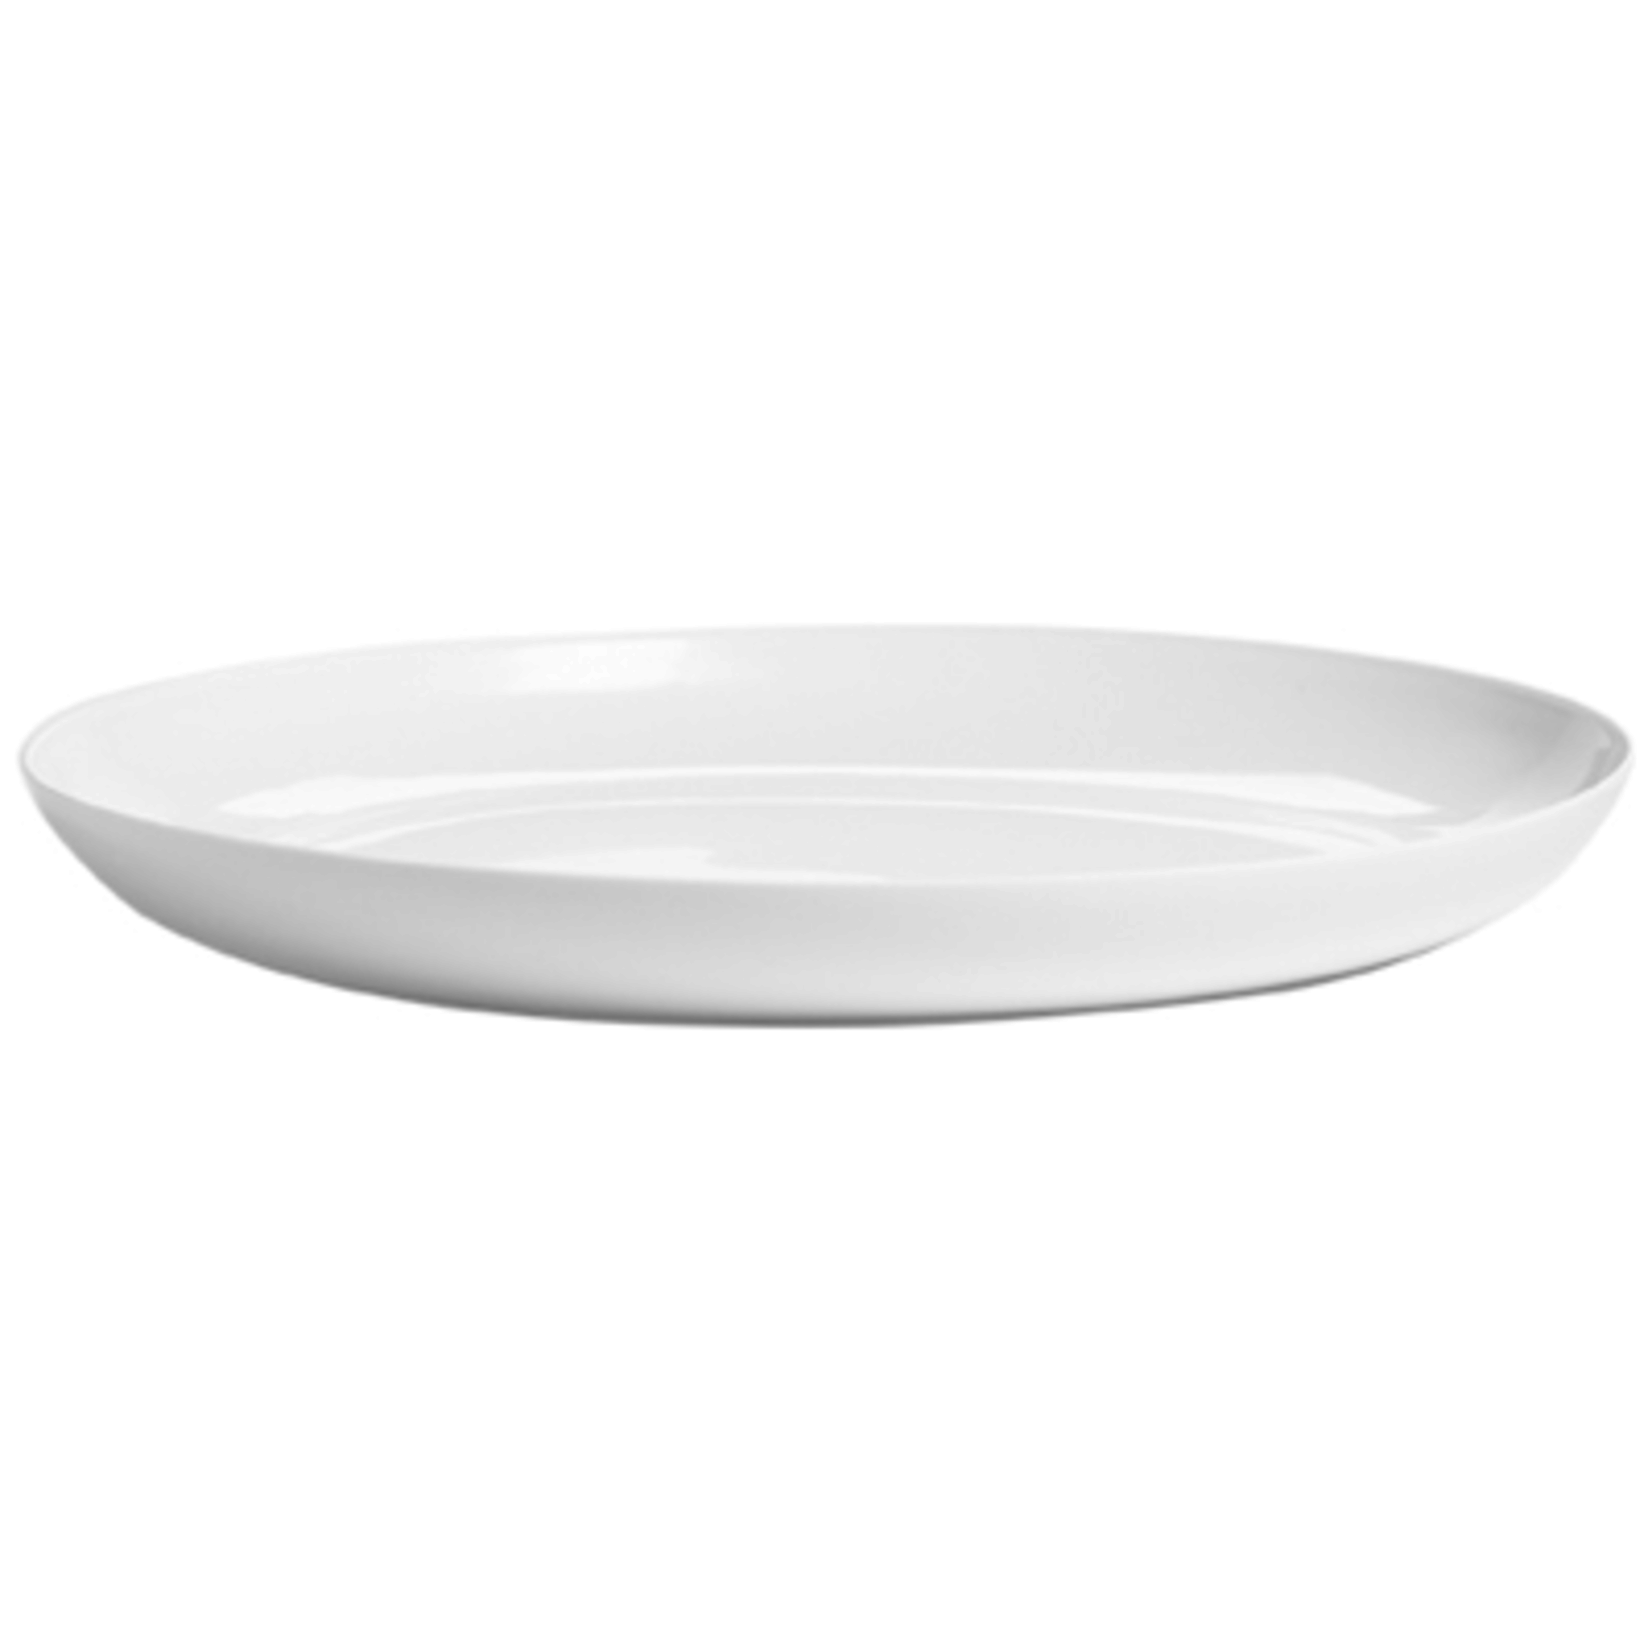 6" Designer Dish - White 99996w